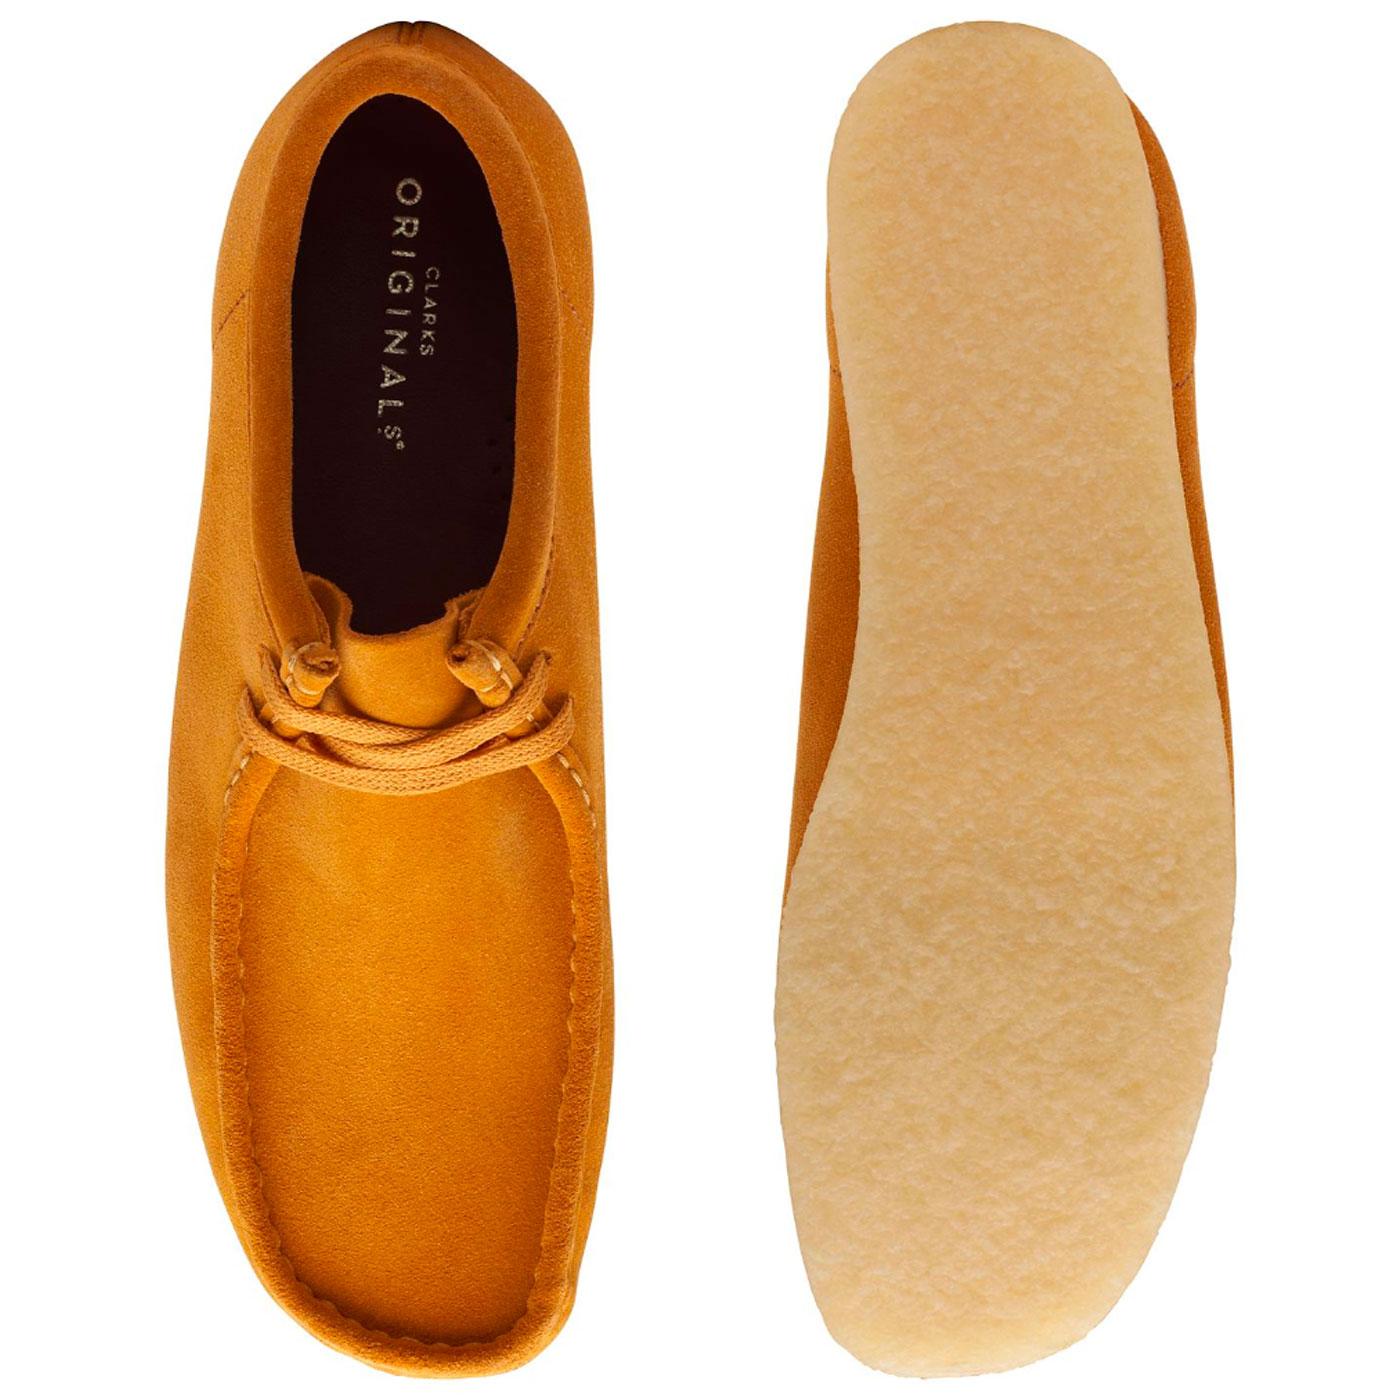 clarks orange suede shoes